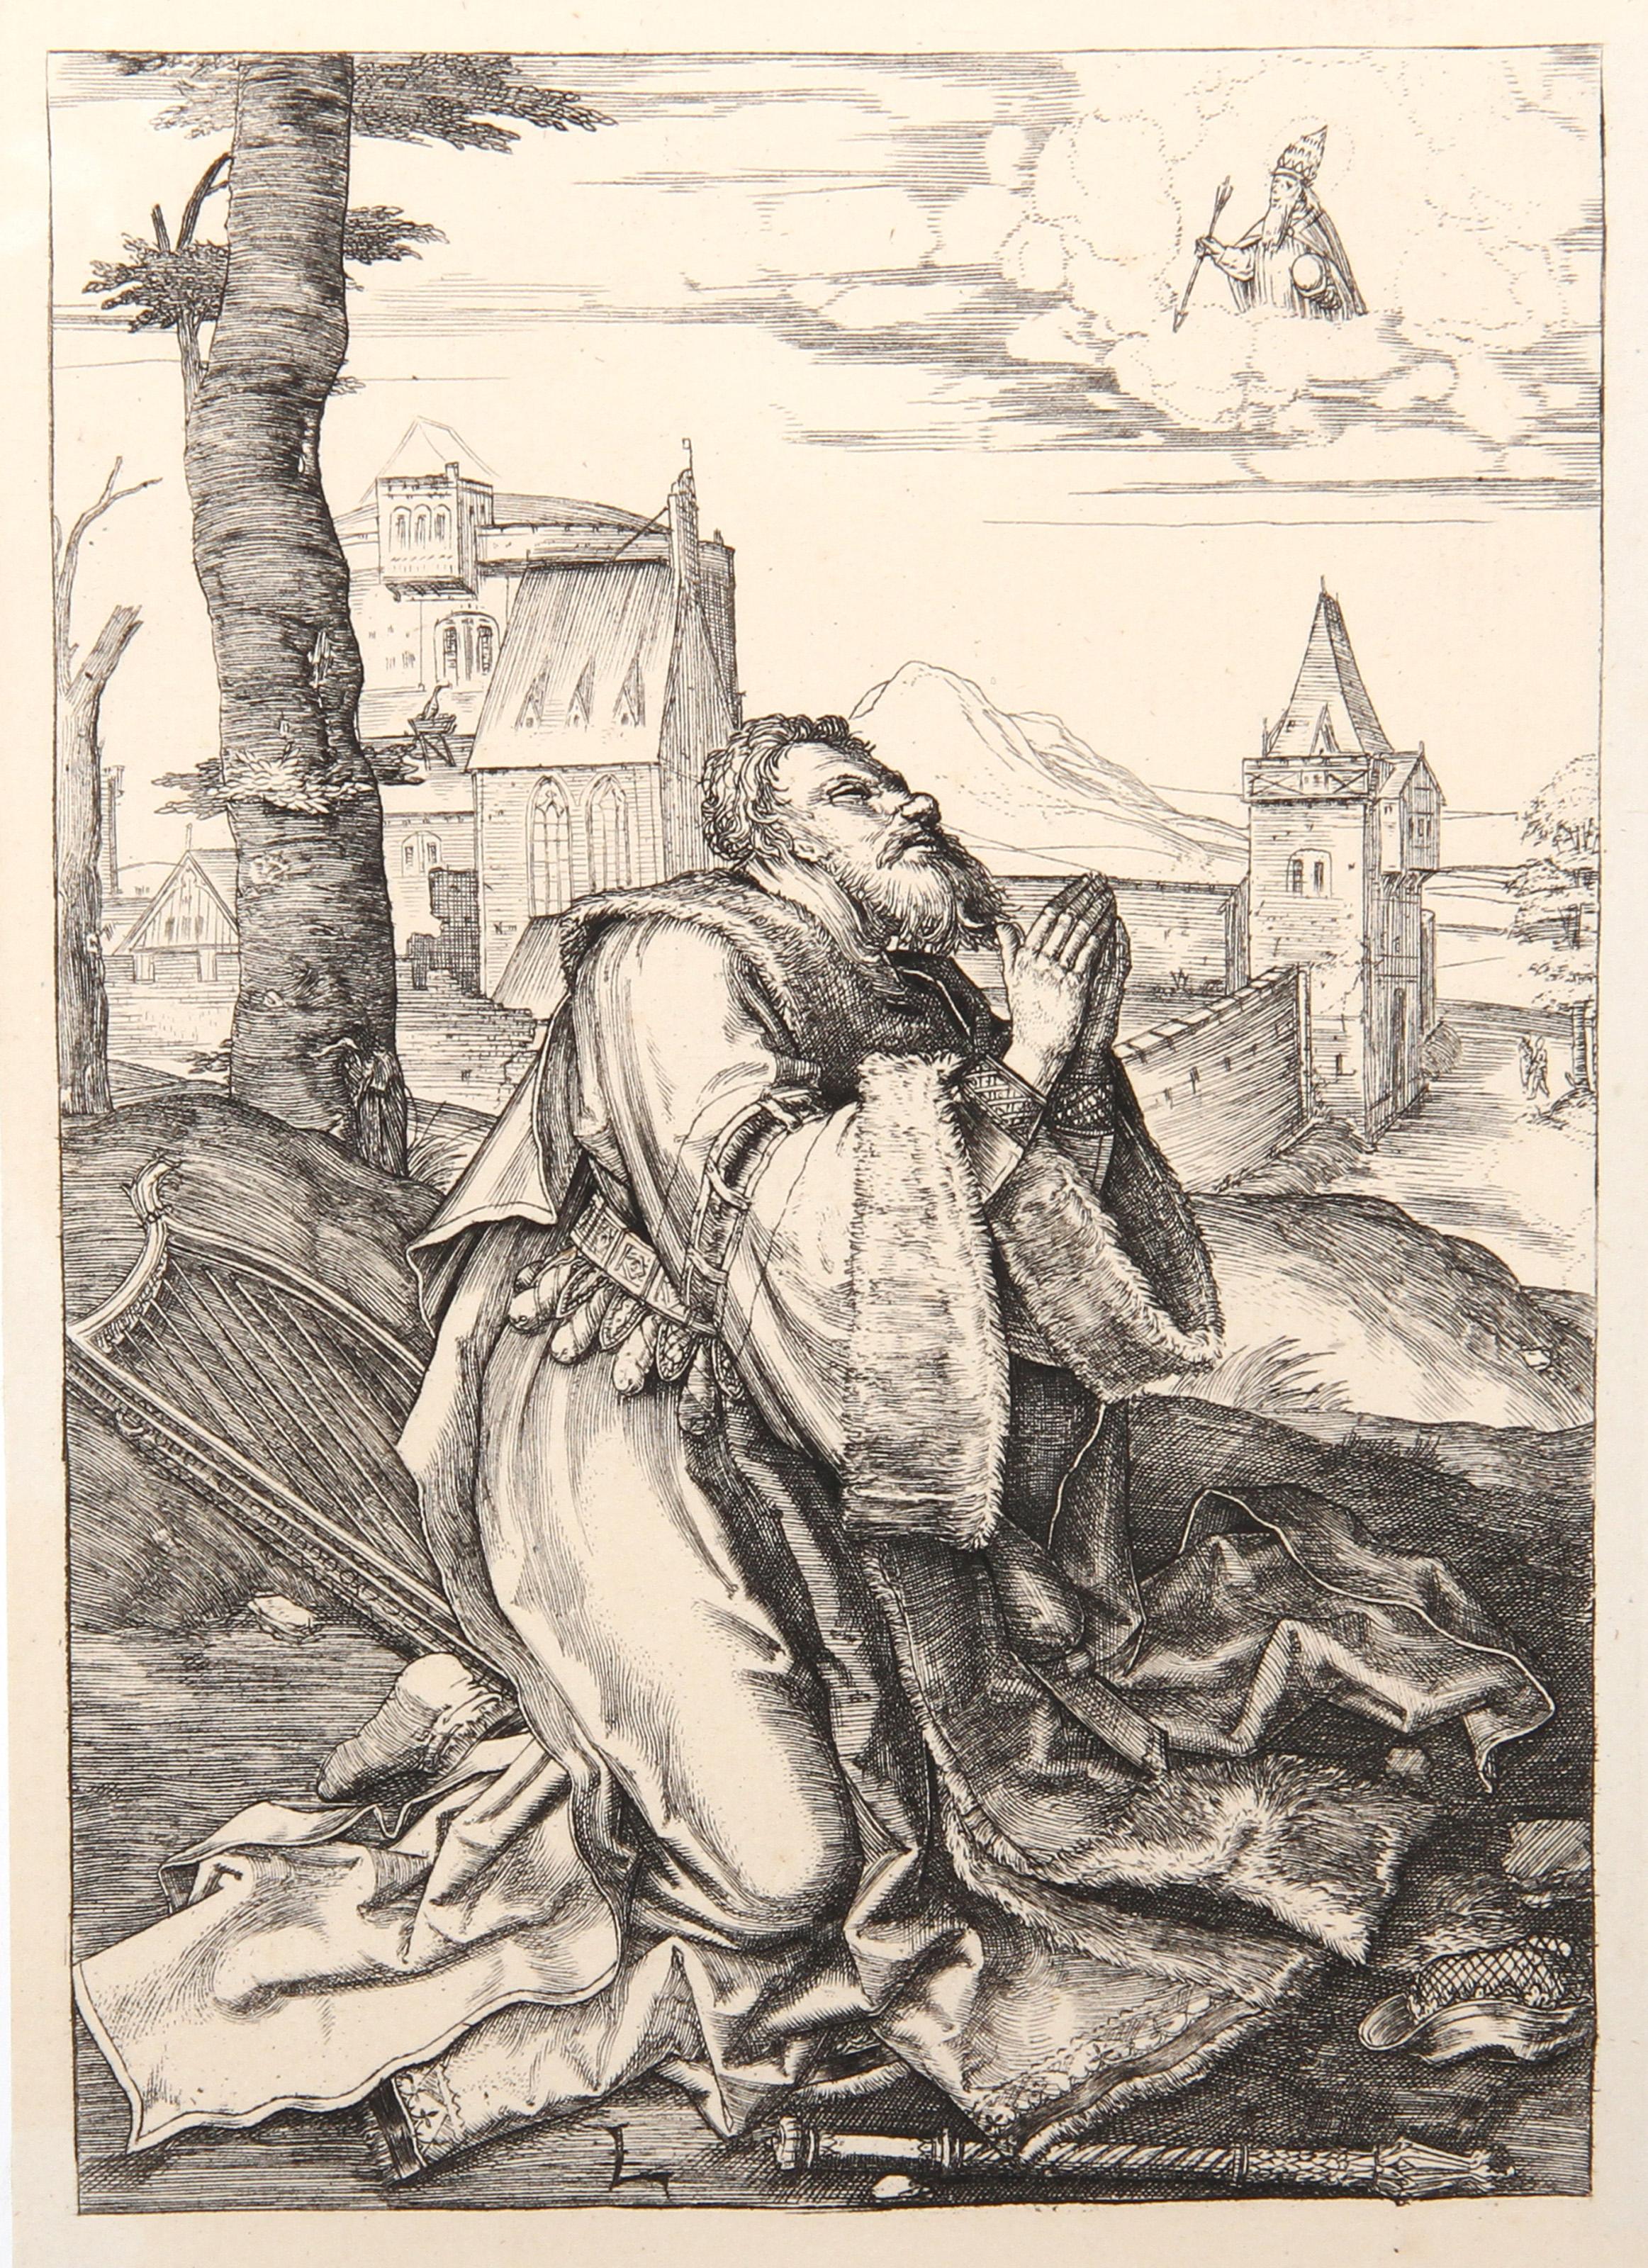 Artist: Lucas van Leyden, After by Amand Durand, Dutch (1494 - 1533) - David en Priere, Year: 1873, Medium: Heliogravure, Size: 7  x 4.75 in. (17.78  x 12.07 cm), Printer: Amand Durand, Description: French Engraver and painter Charles Amand Durand,